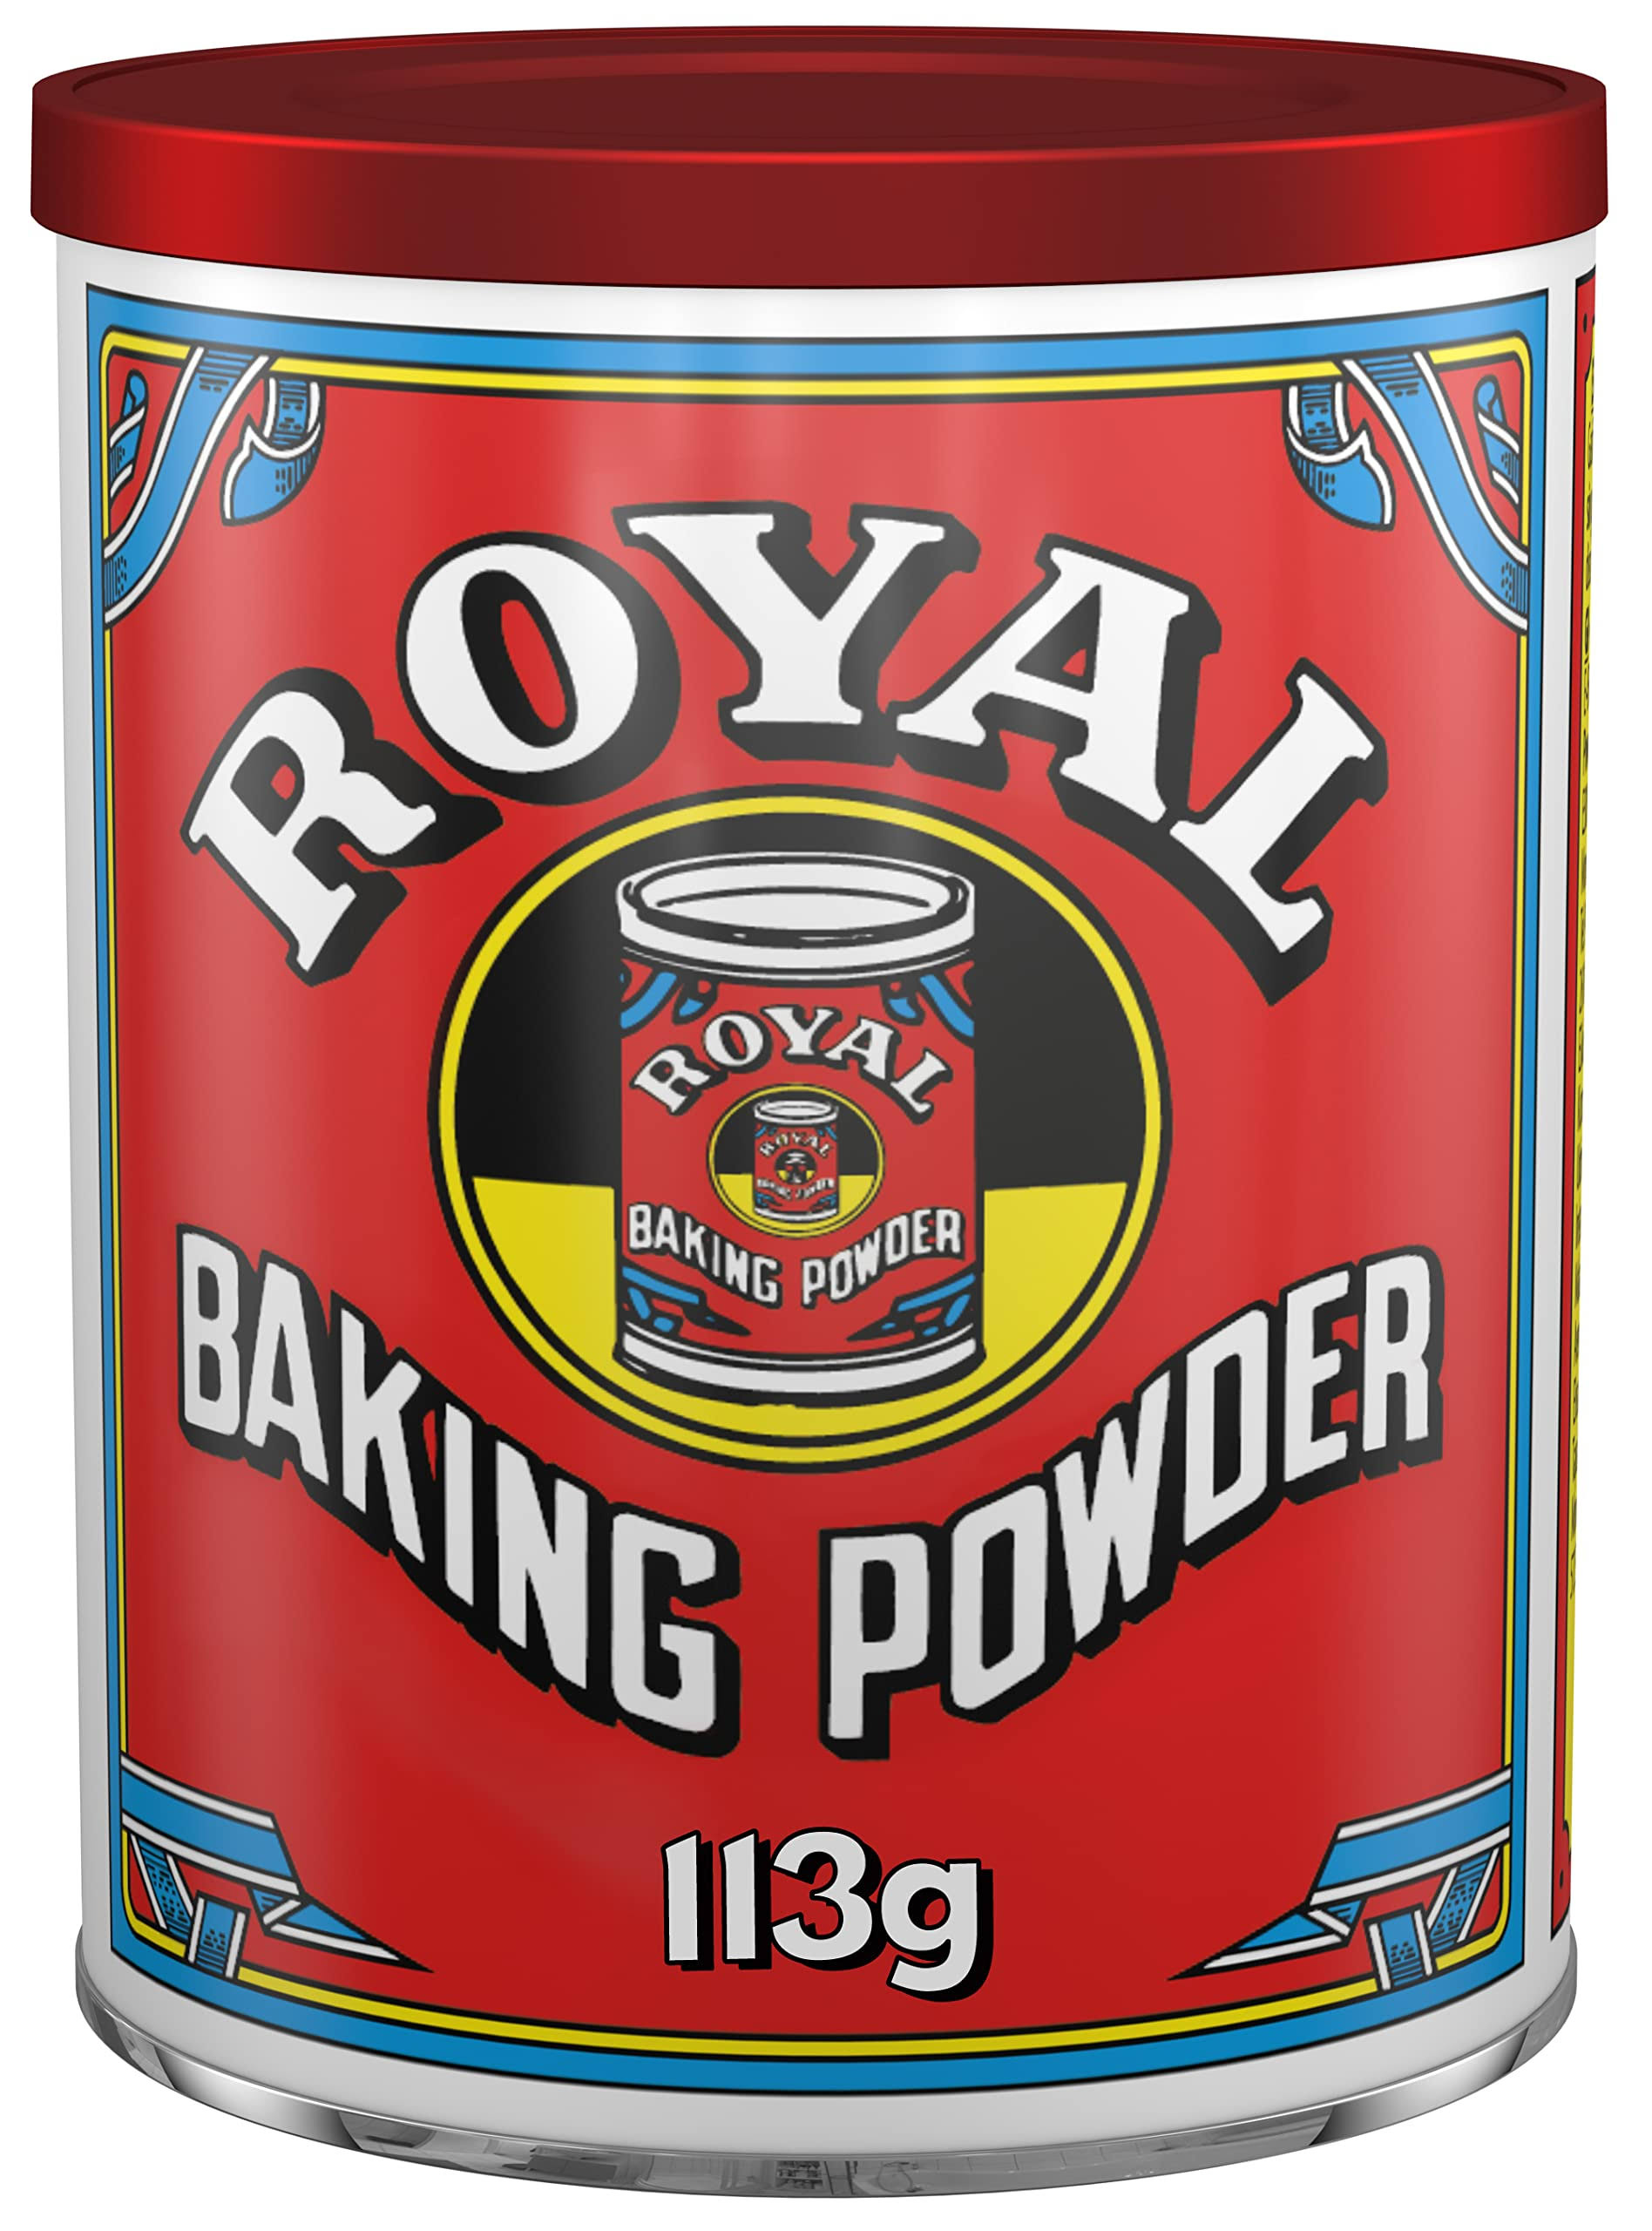 Baking Powder Royal 113g